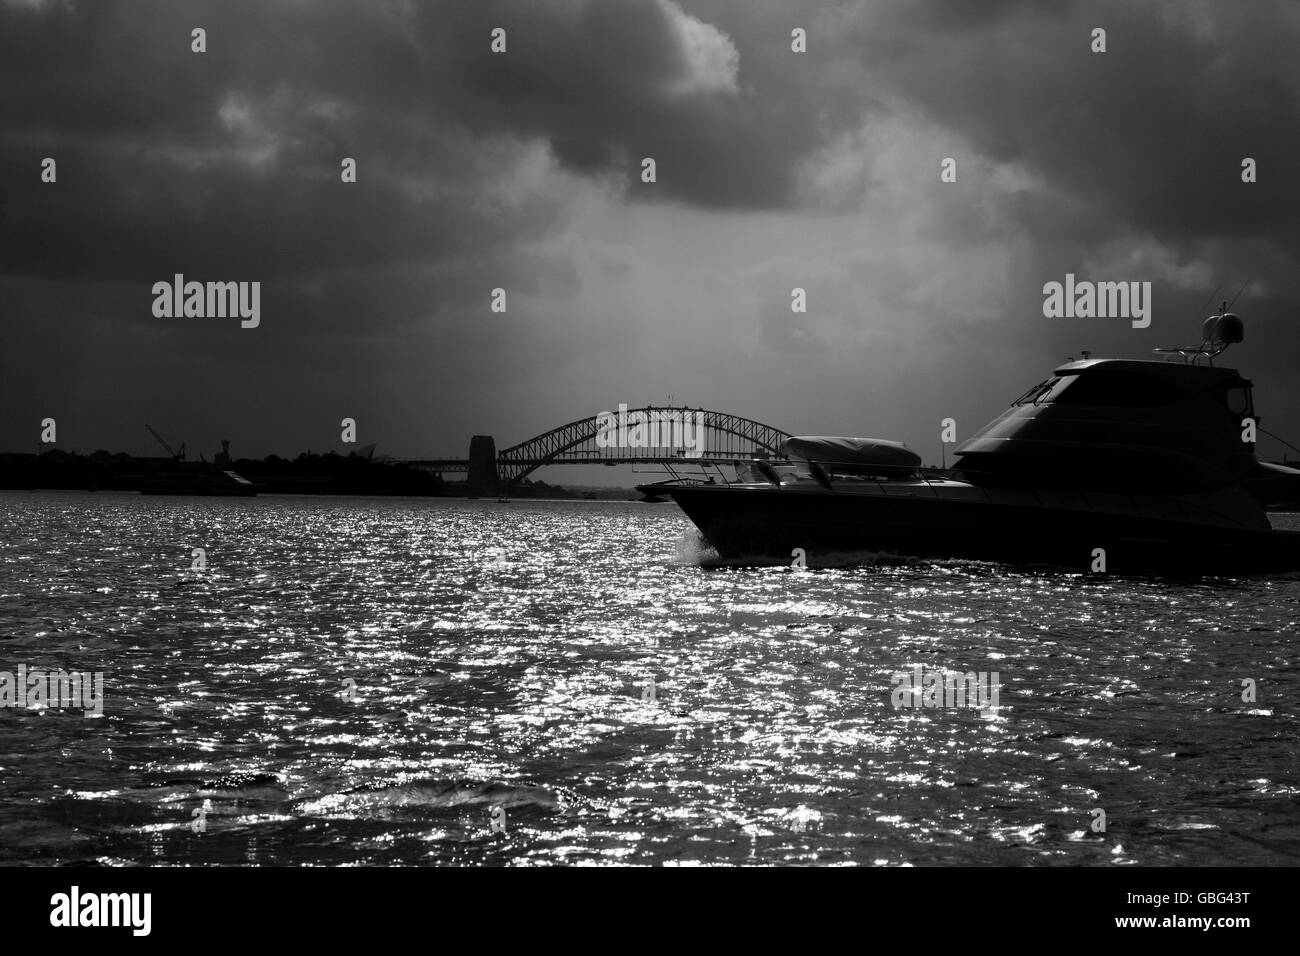 A Black and White image of The Harbour Bridge in Sydney, Australia Stock Photo